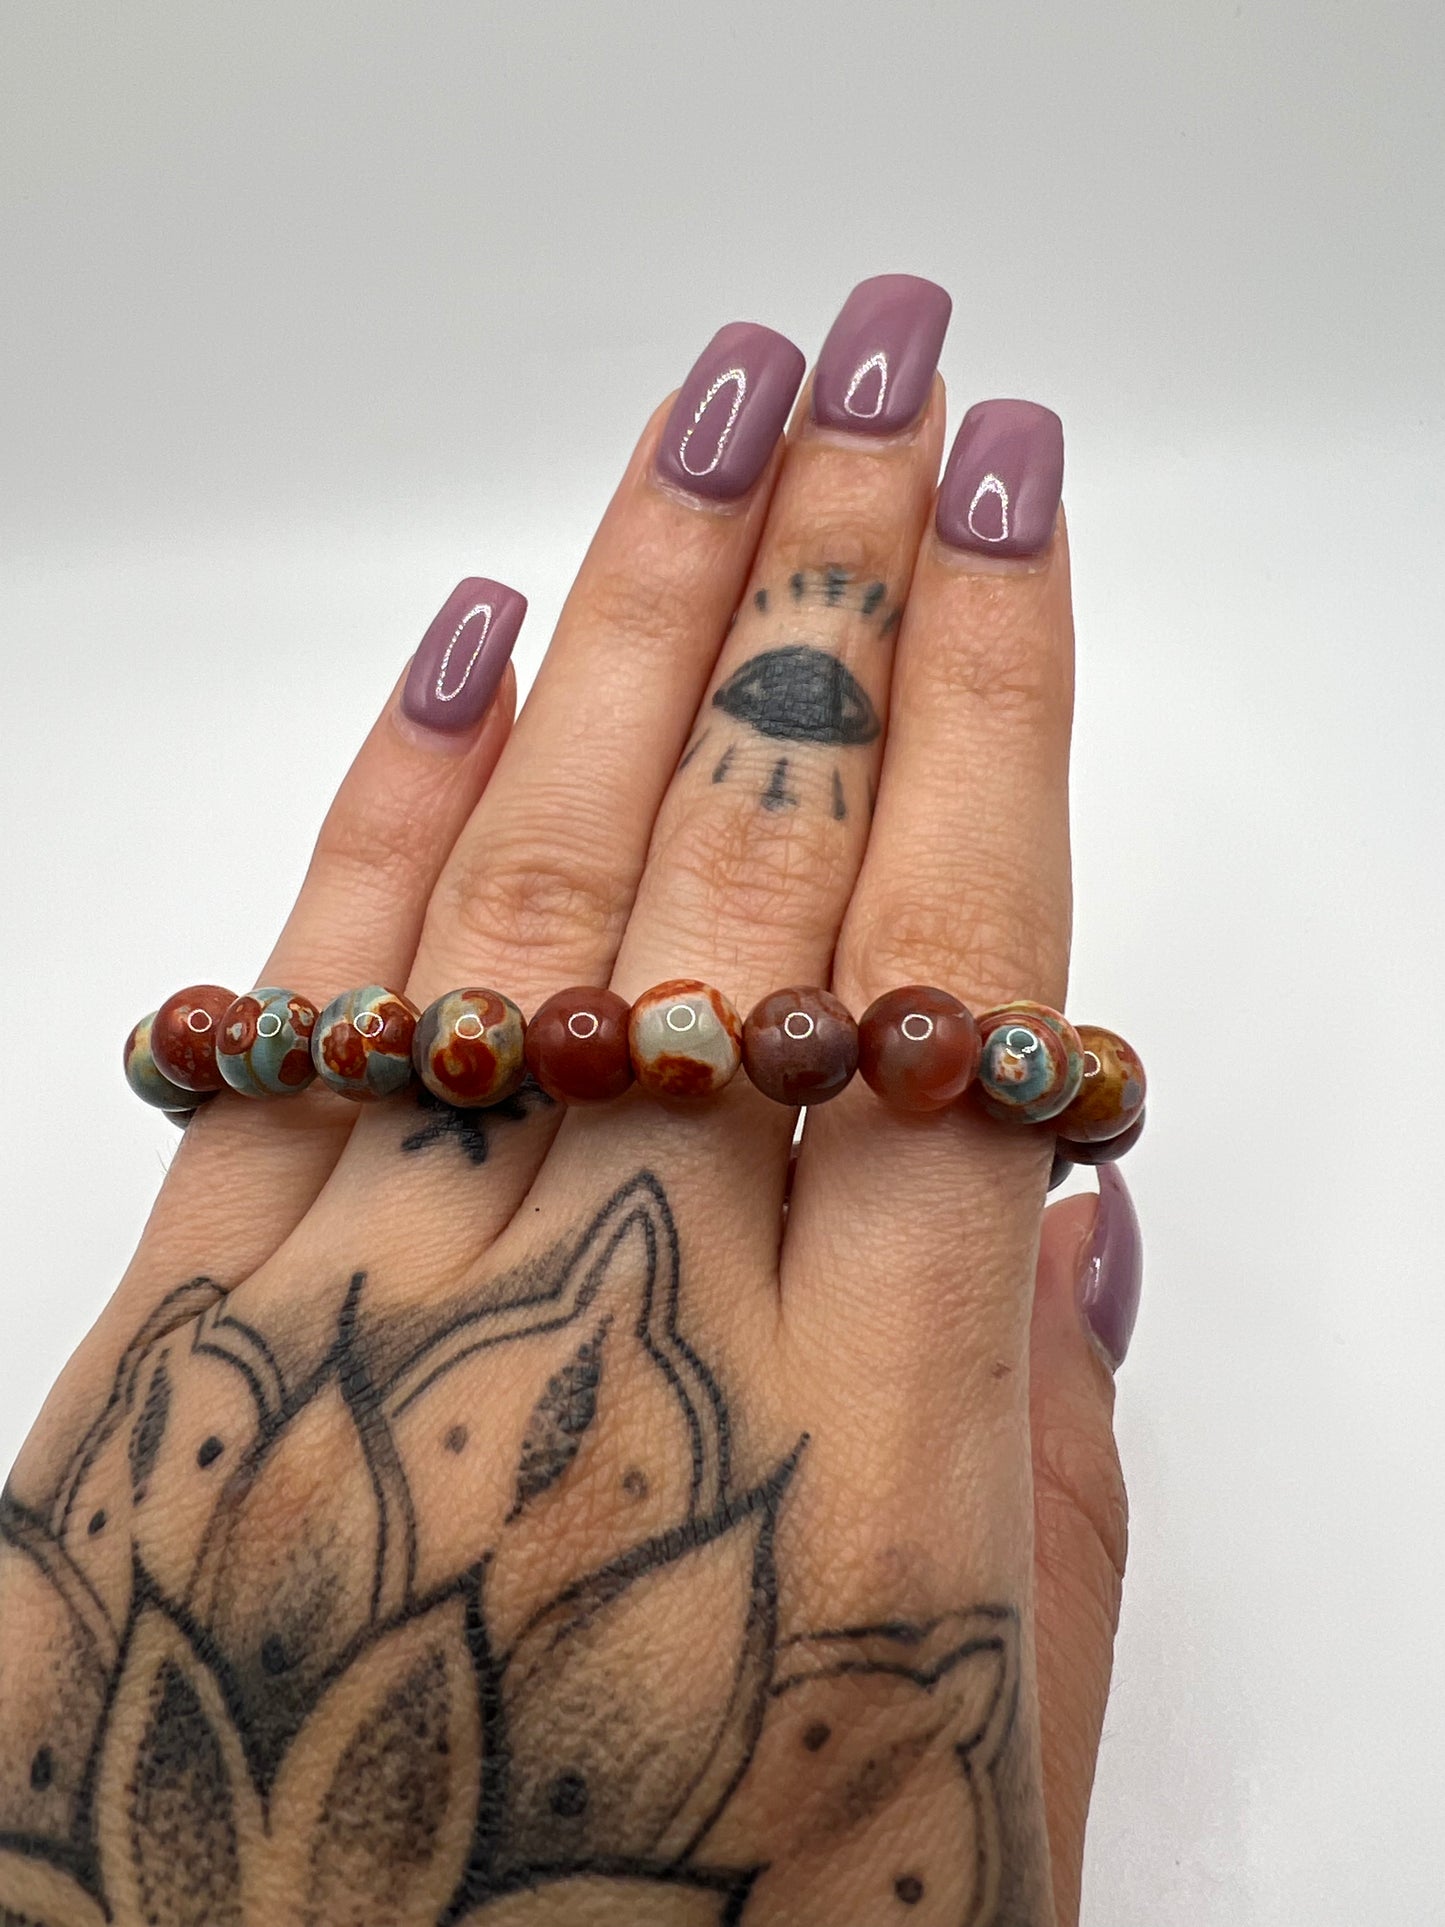 Crystal bead bracelet